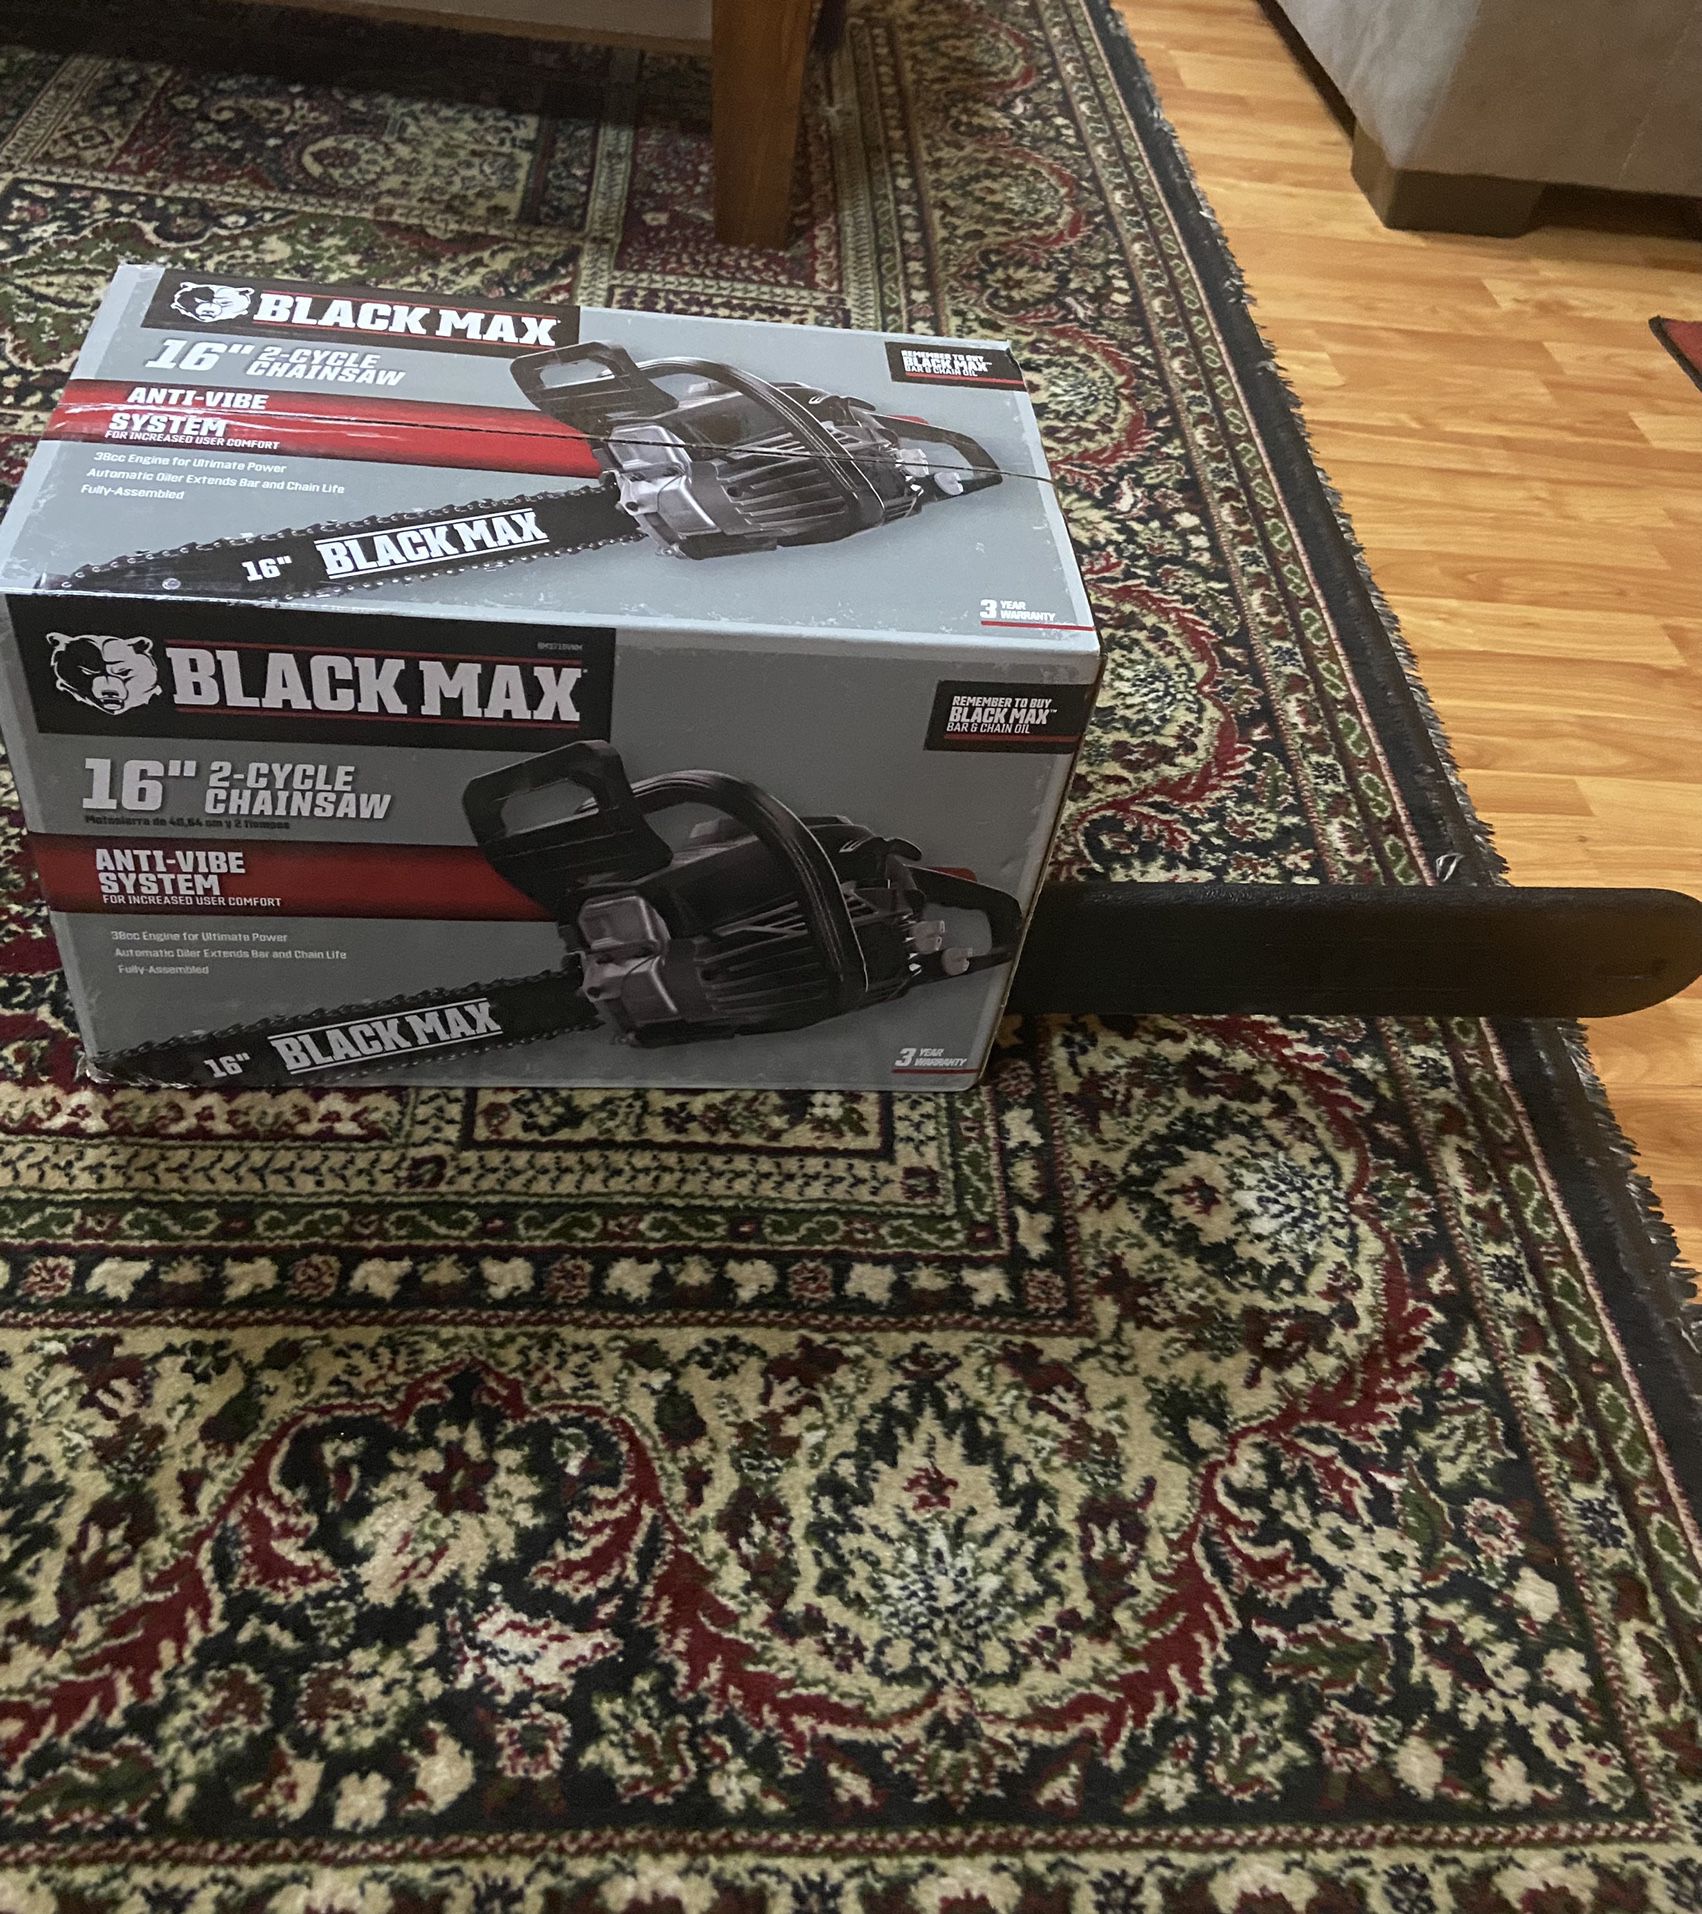 Black Max 16” 2-Cycle Chainsaw 